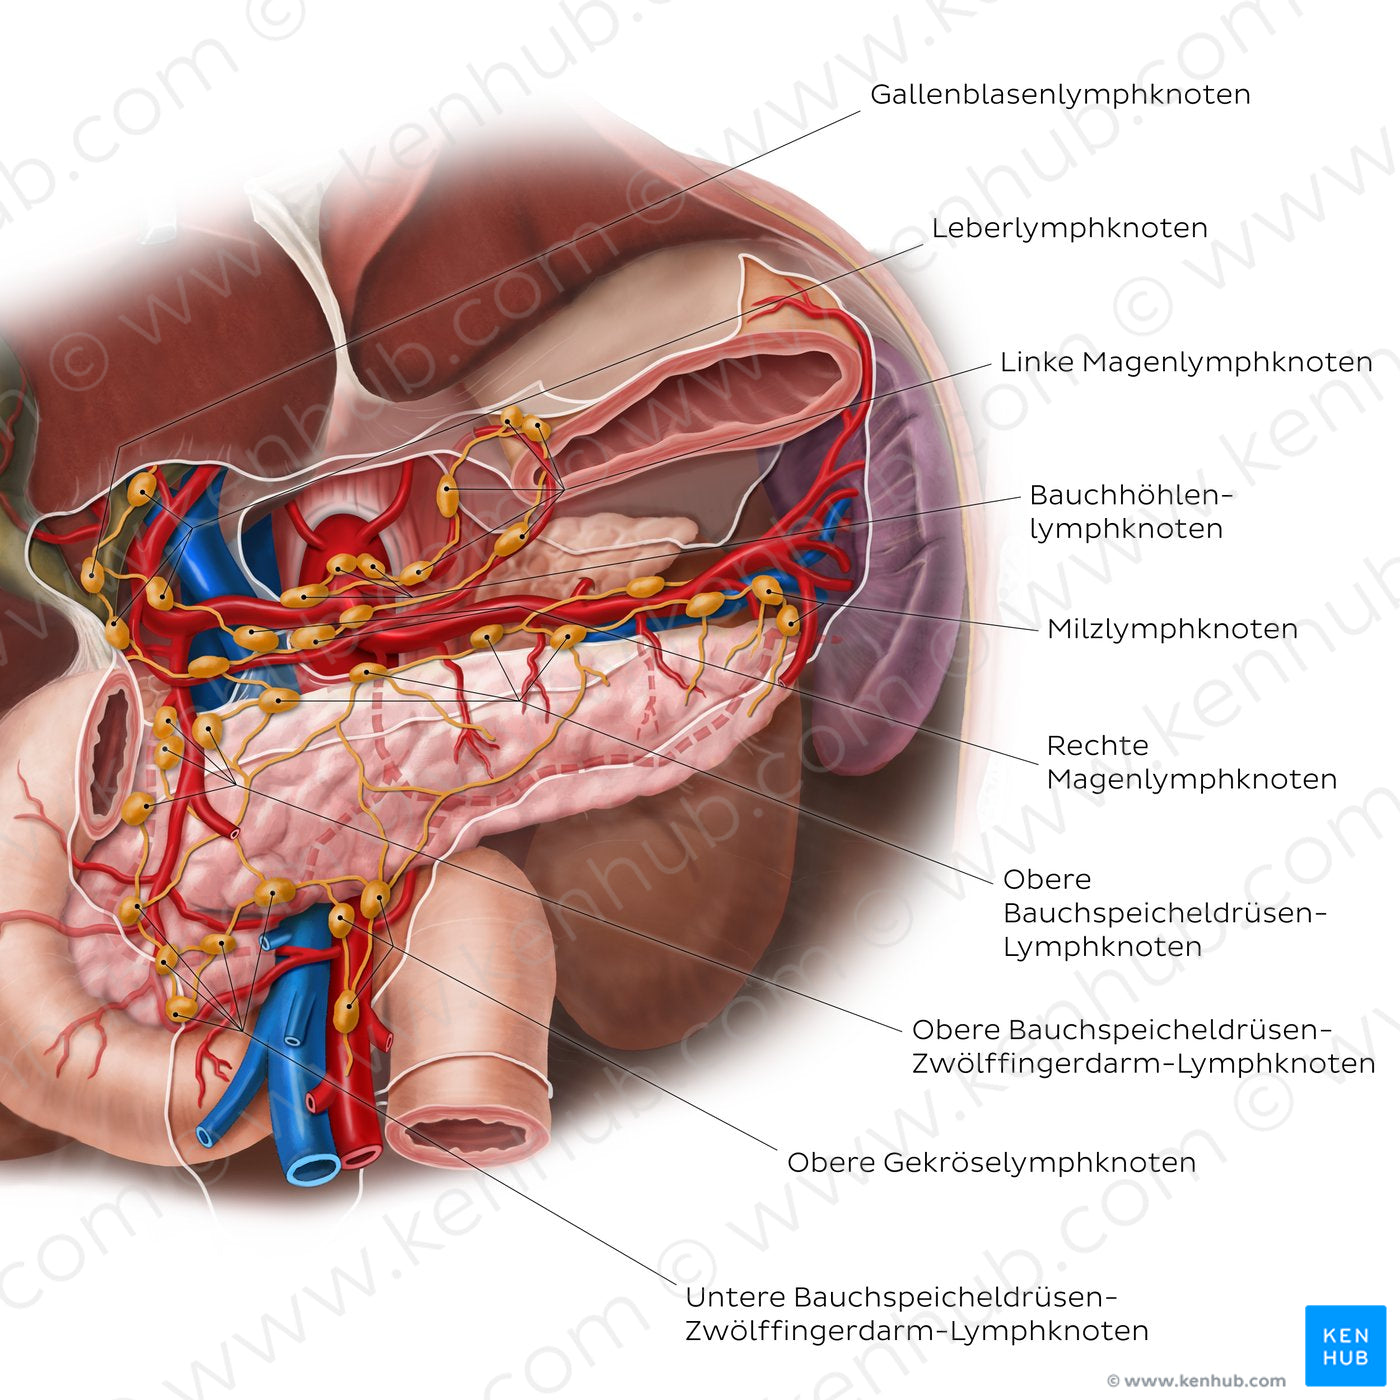 Lymphatics of the pancreas, duodenum and spleen (German)